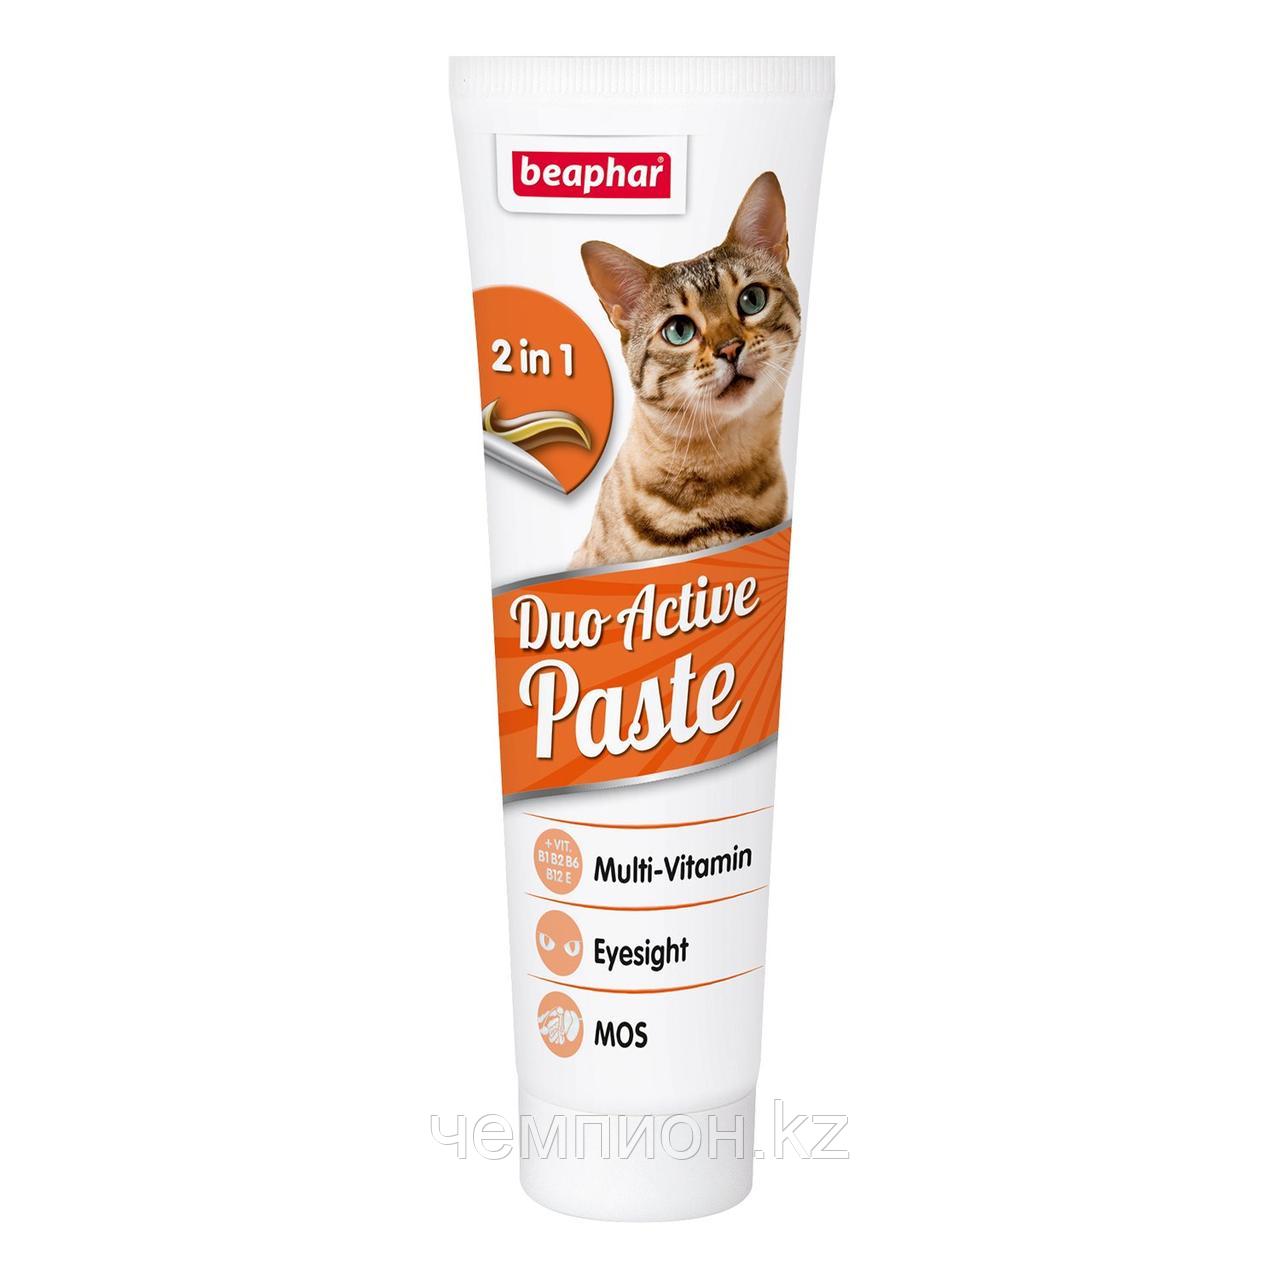 Beaphar *Duo Active Paste*, паста для кошек мультивитаминная, 100г